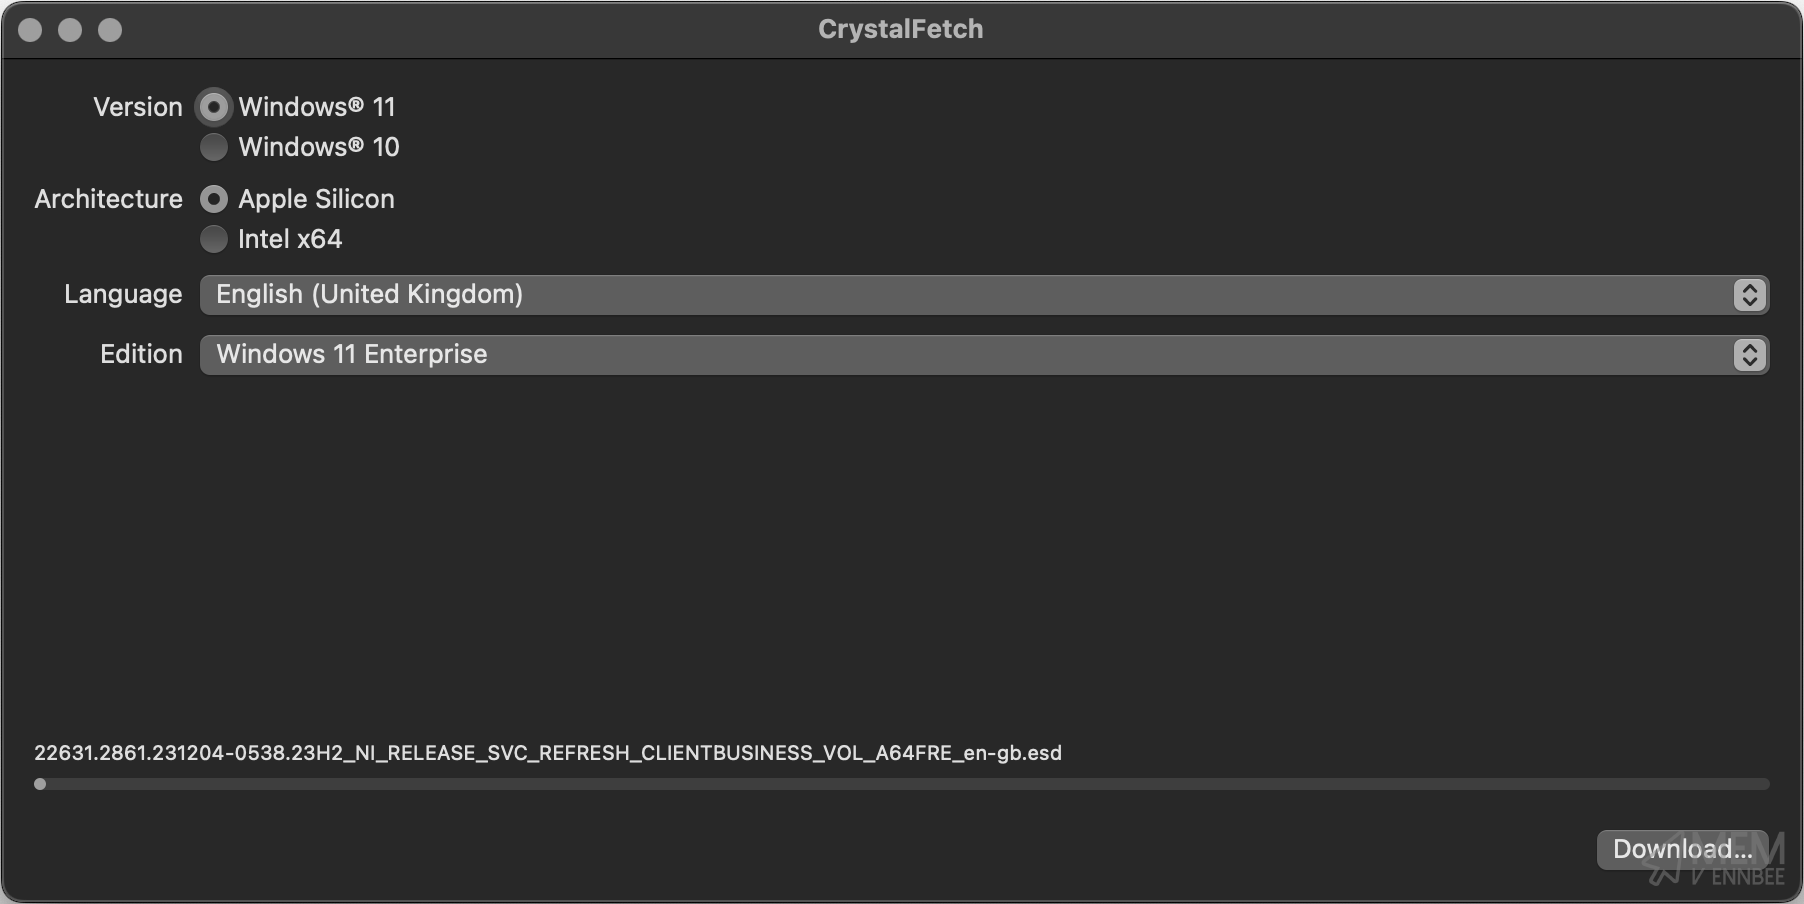 CrystalFetch downloading Windows 11 ARM